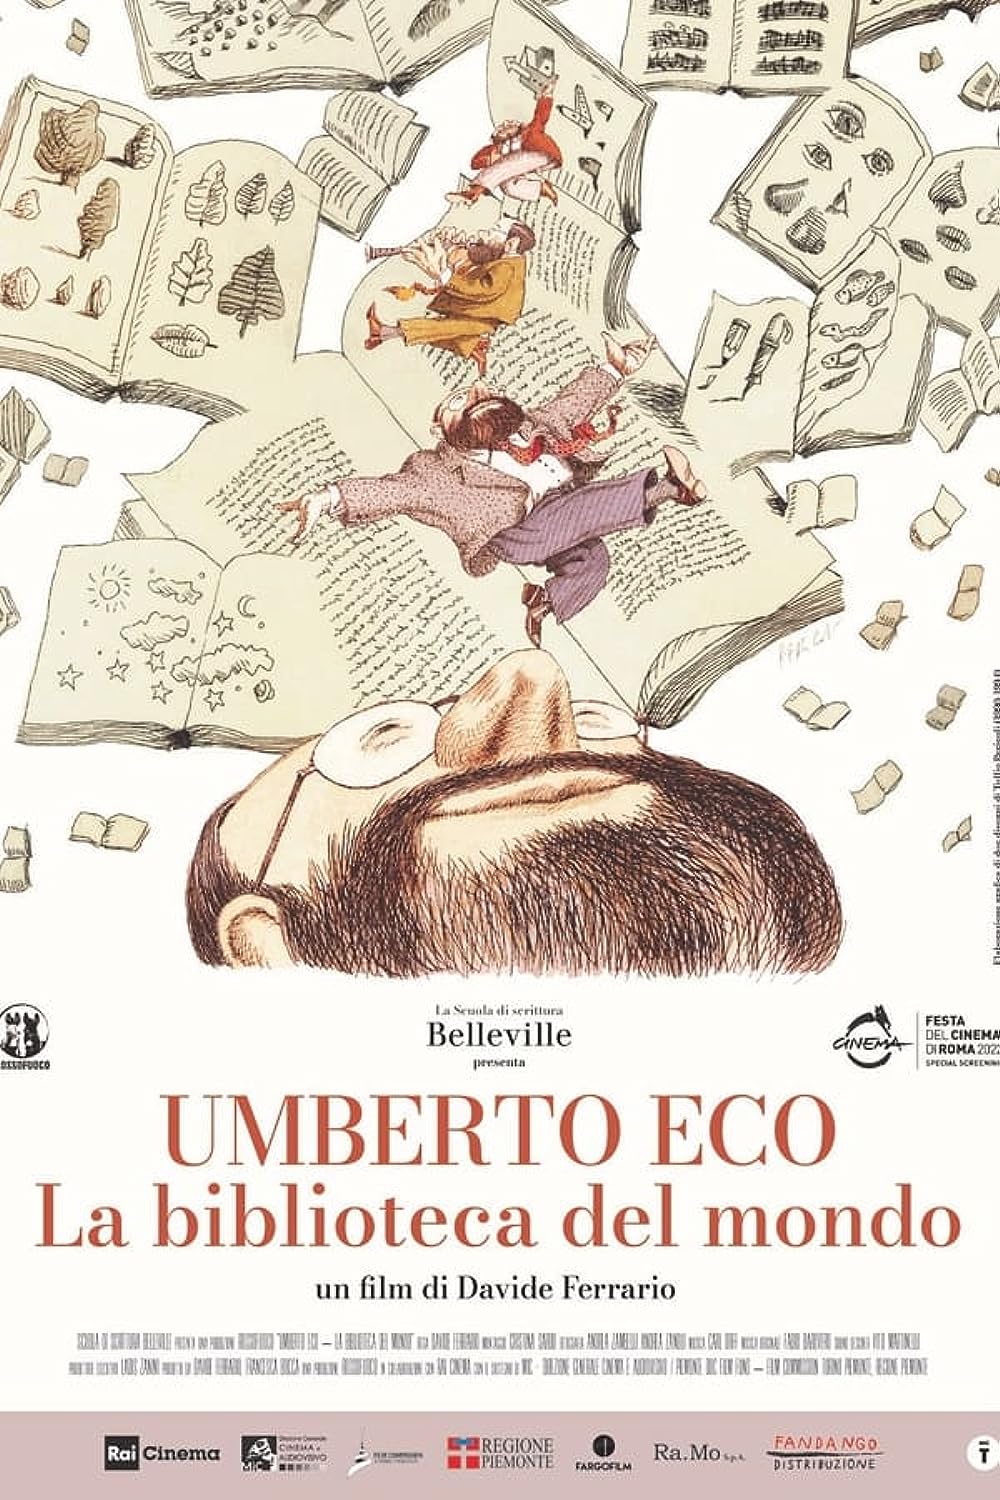 Laemmle Umberto Edo A Library of the World